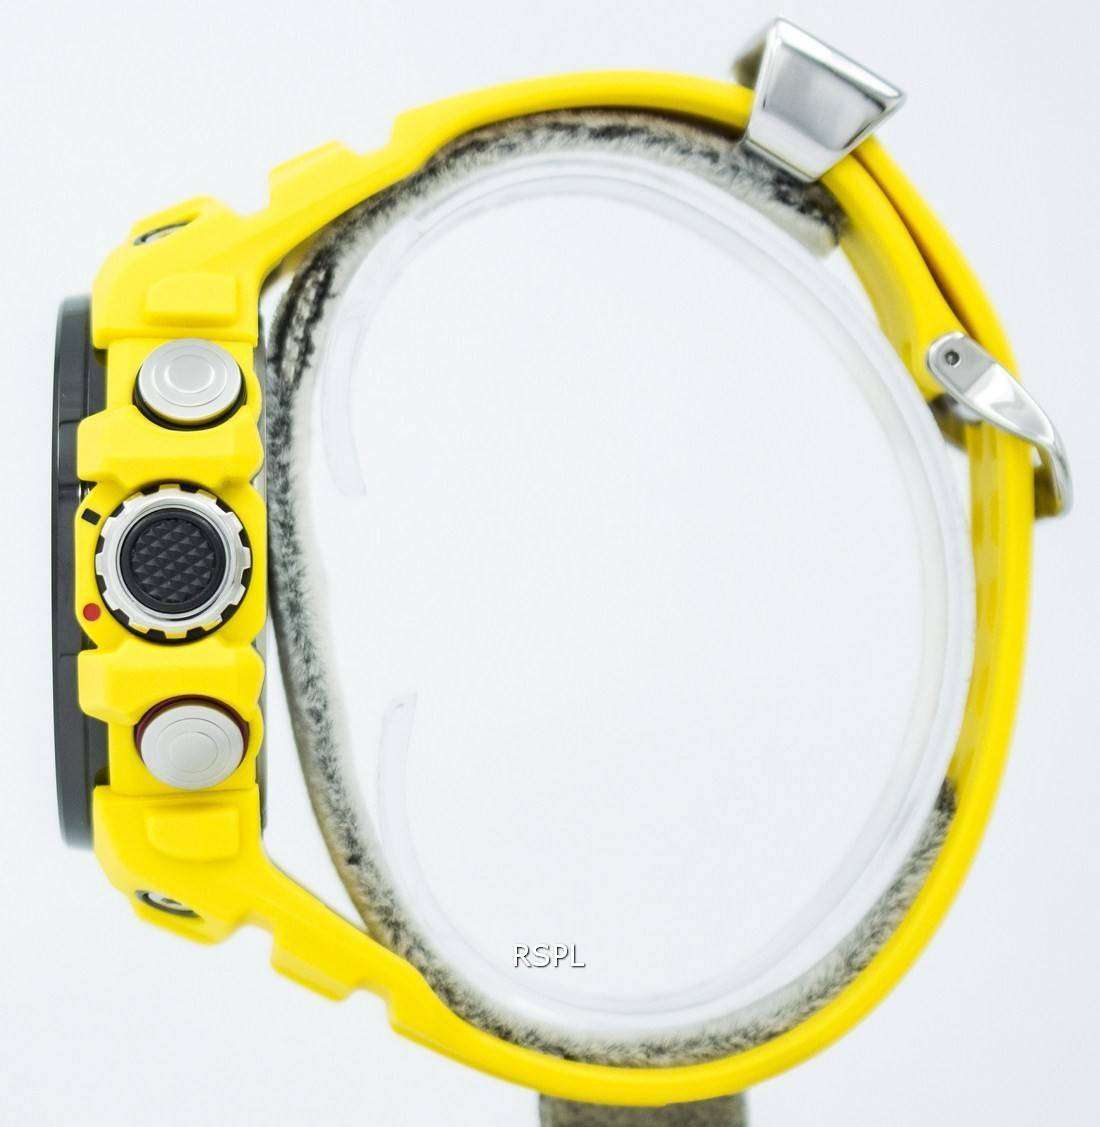 Casio G-Shock GULFMASTER Triple Sensor Atomic GWN-1000H-9A Men's Watch